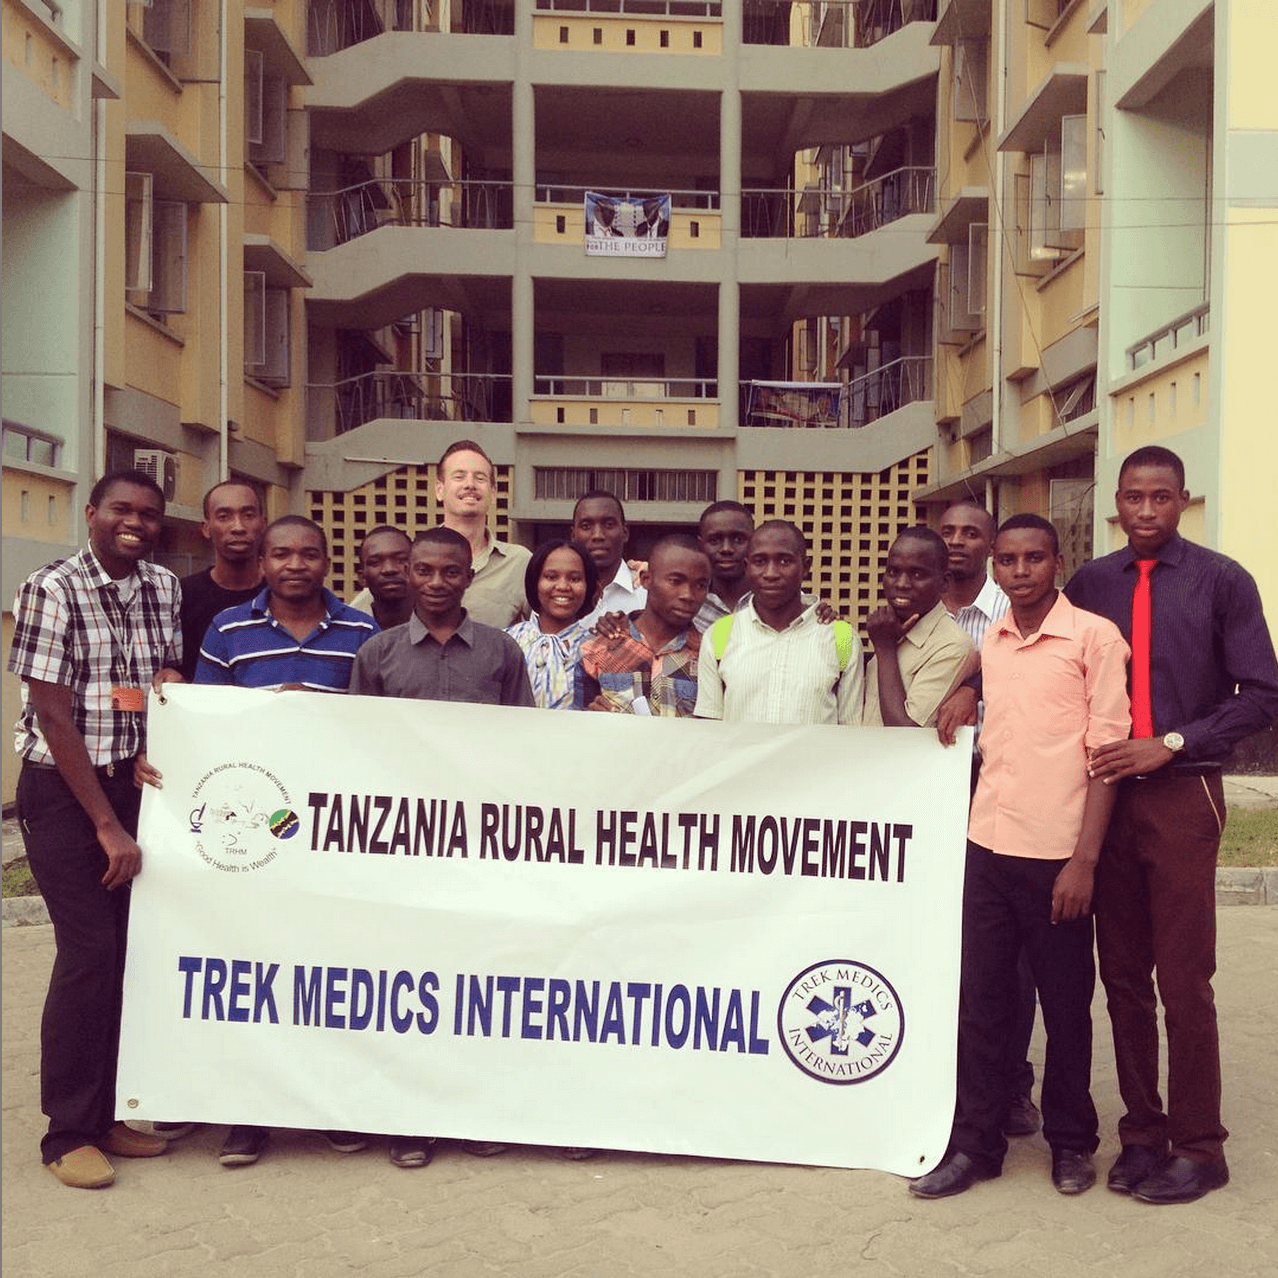 Tanzania Rural Health Movement and Trek Medics partner to improve prehospital emergency care in Mwanza, Tanzania